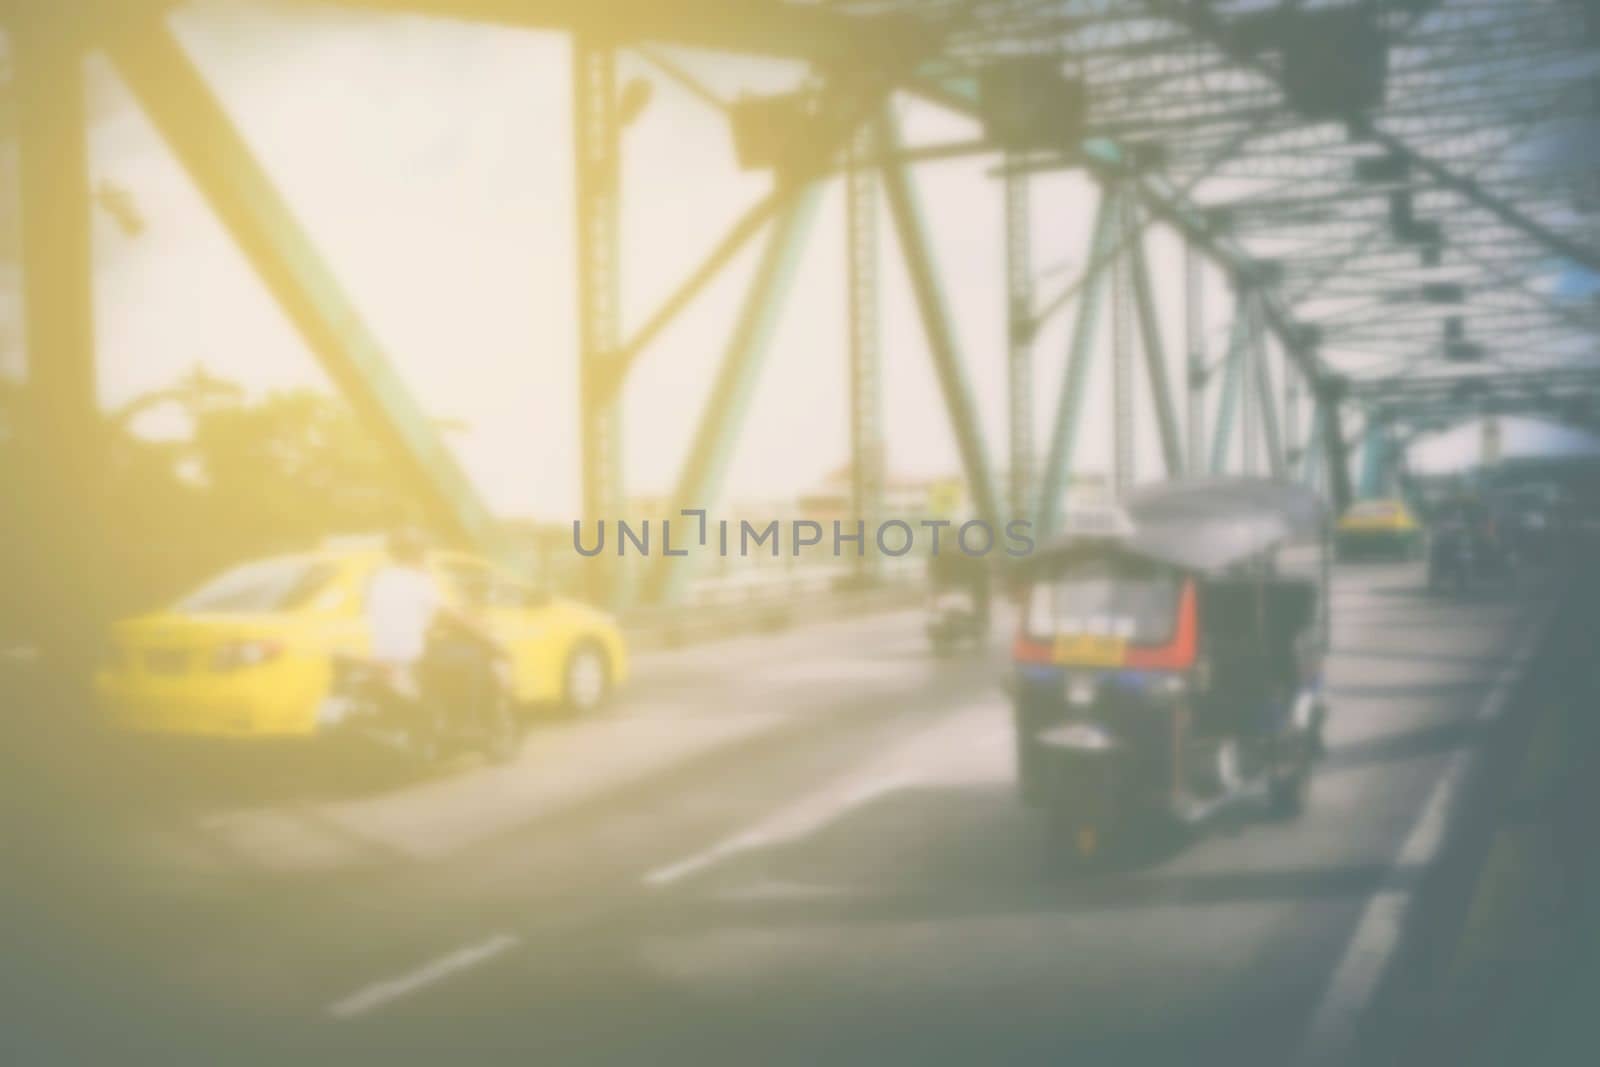 Blurred Tuk Tuk Taxi on Memorial Bridge, Bangkok Thailand. by mesamong